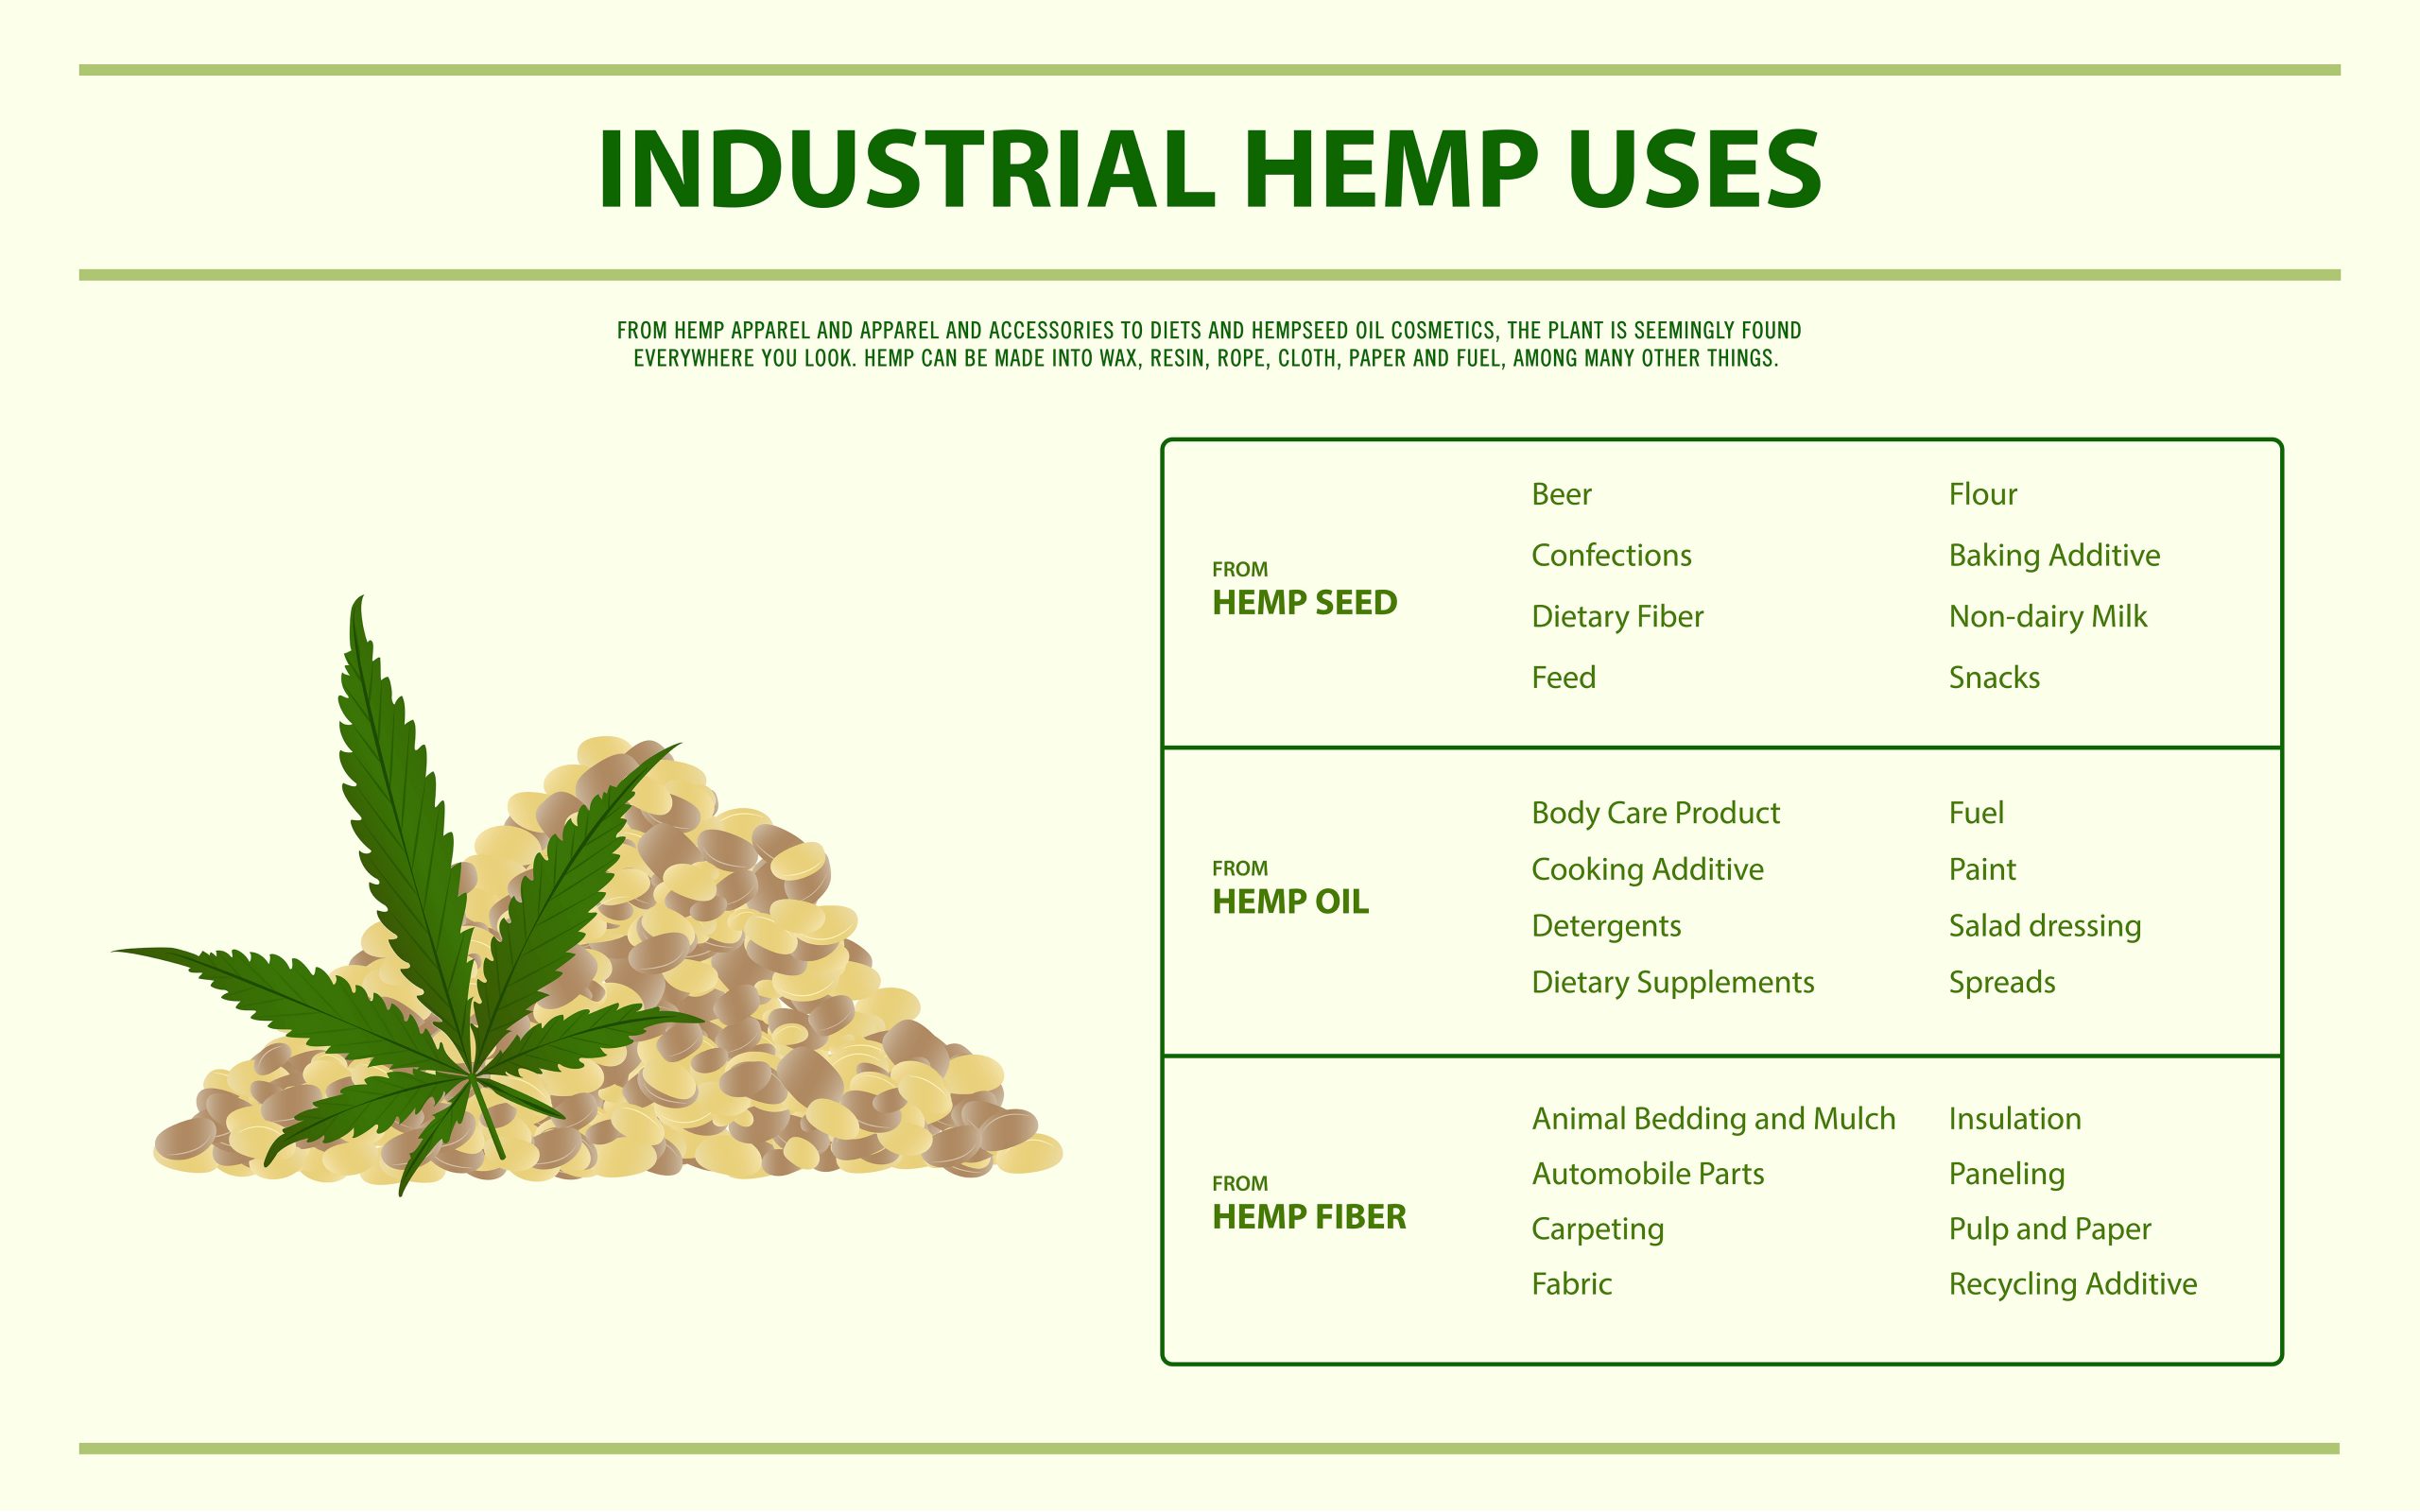 Industrial hemp uses horizontal infographic